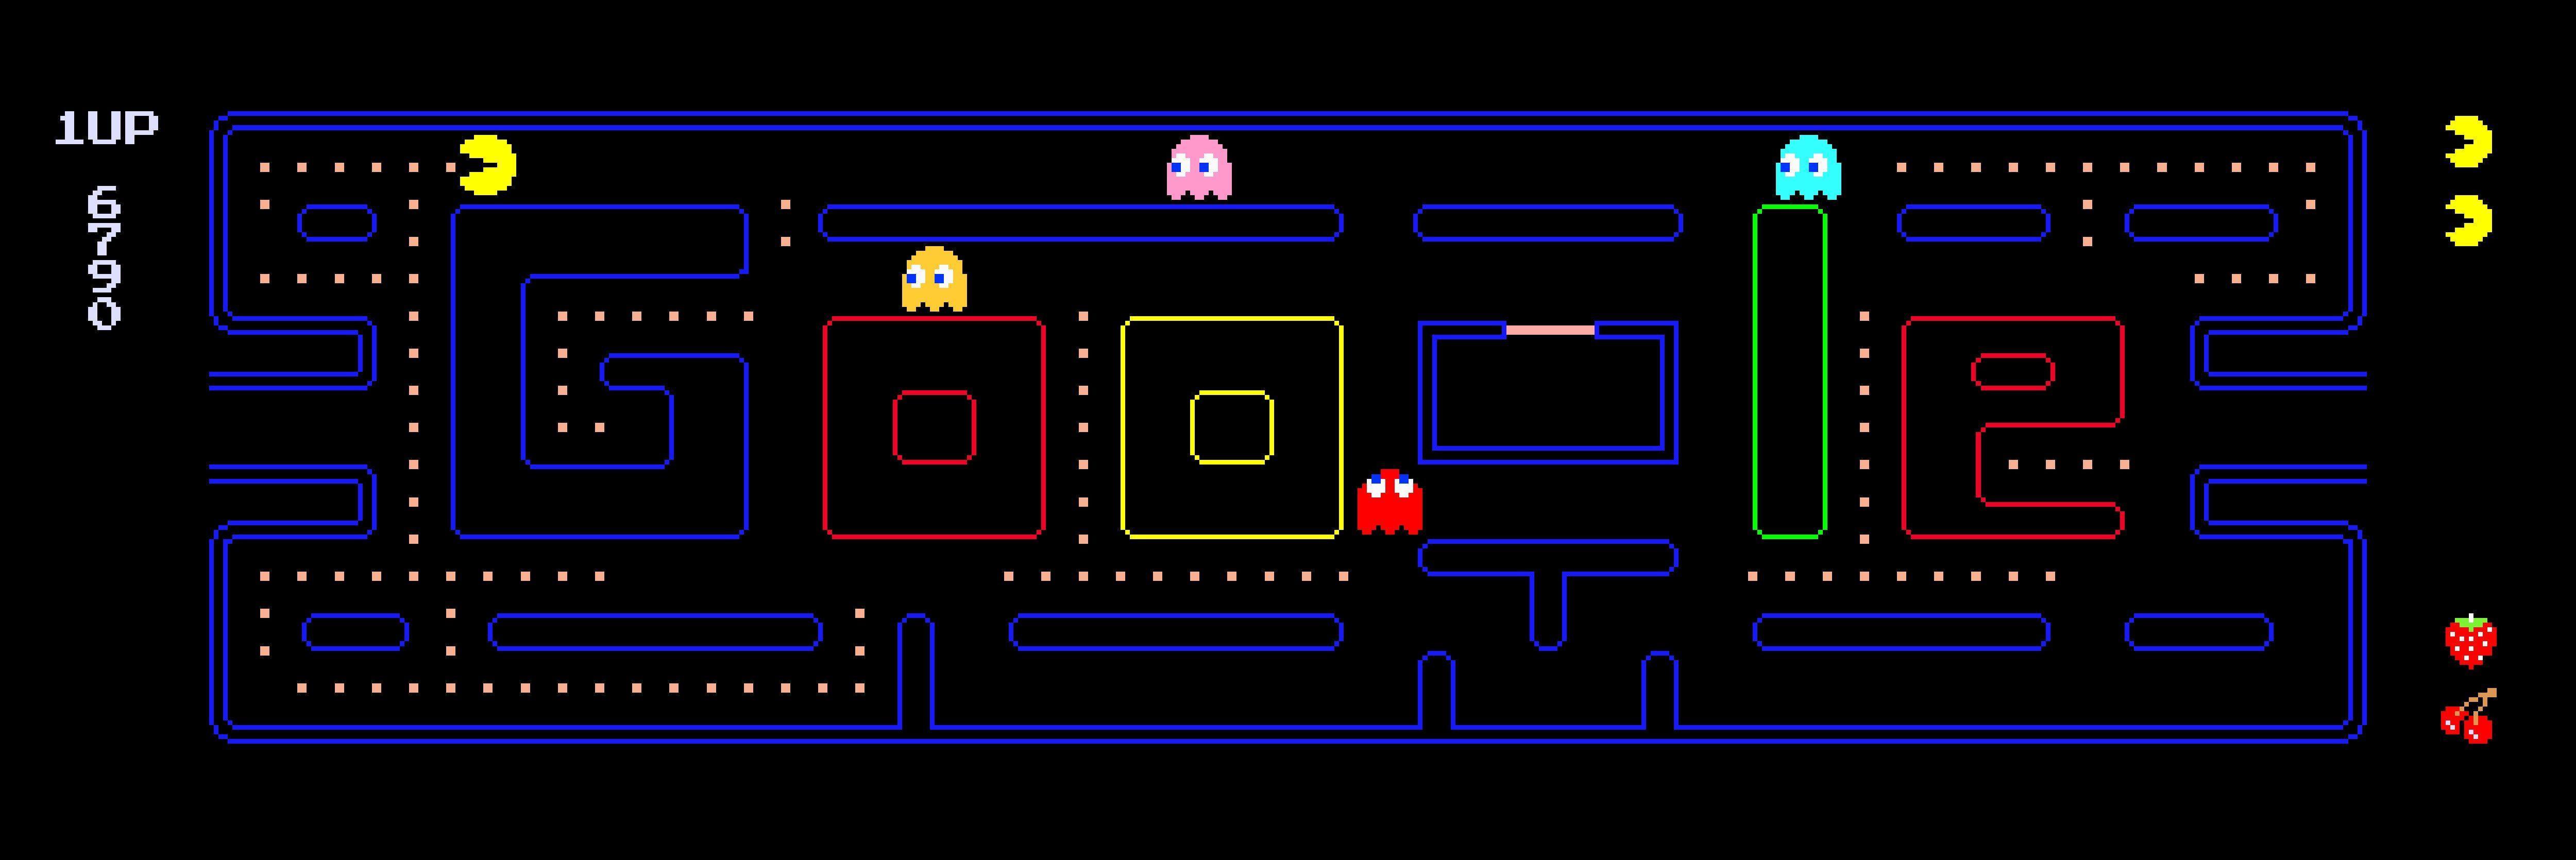 Interactive Google Logo - Interactive Google Doodle Celebrates Pac Man's 30th